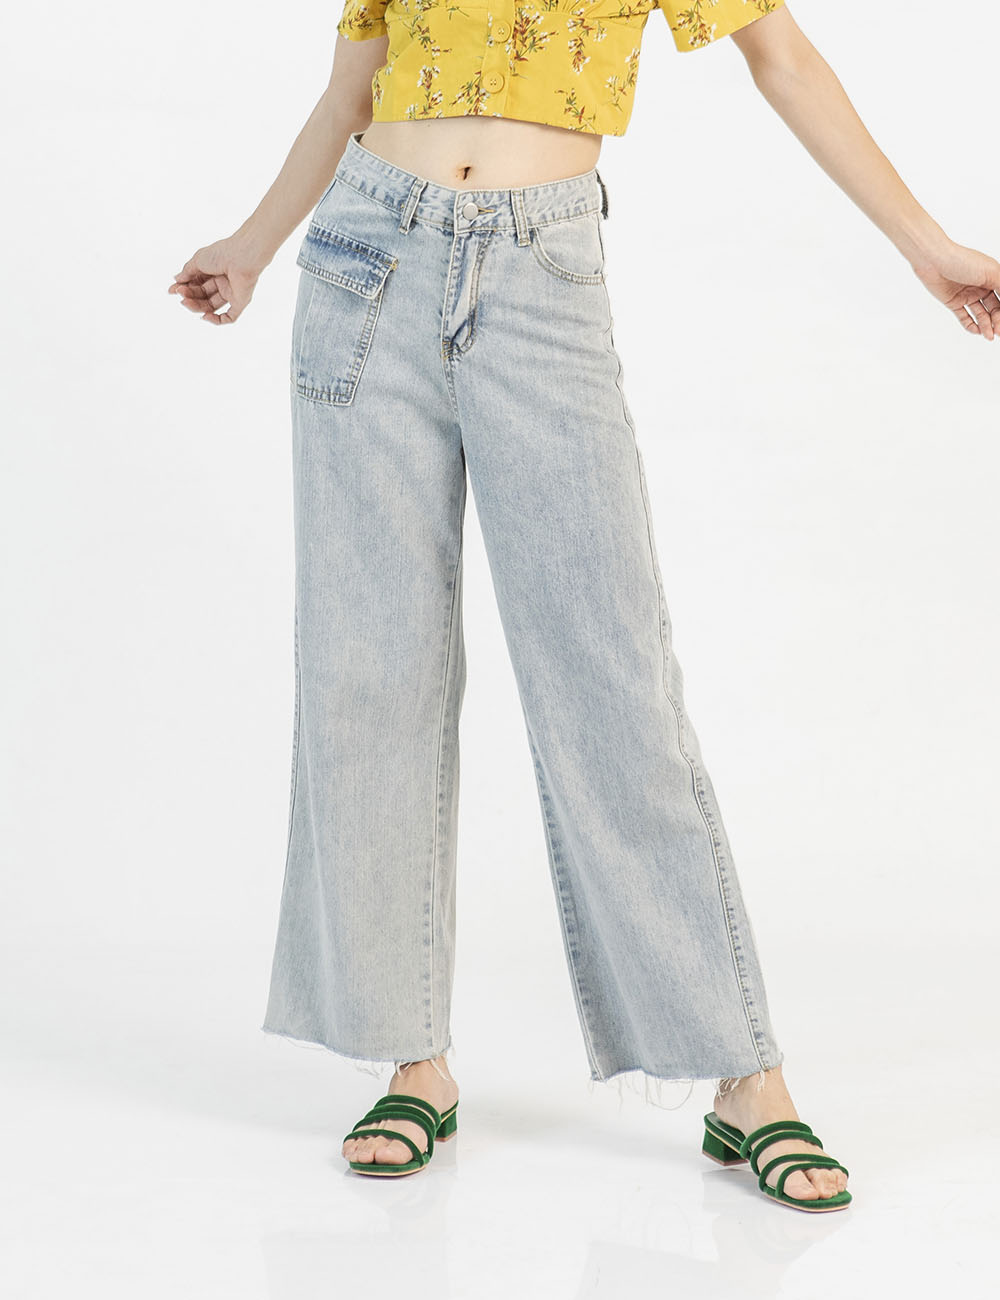 Yuan Market - Cana Jeans